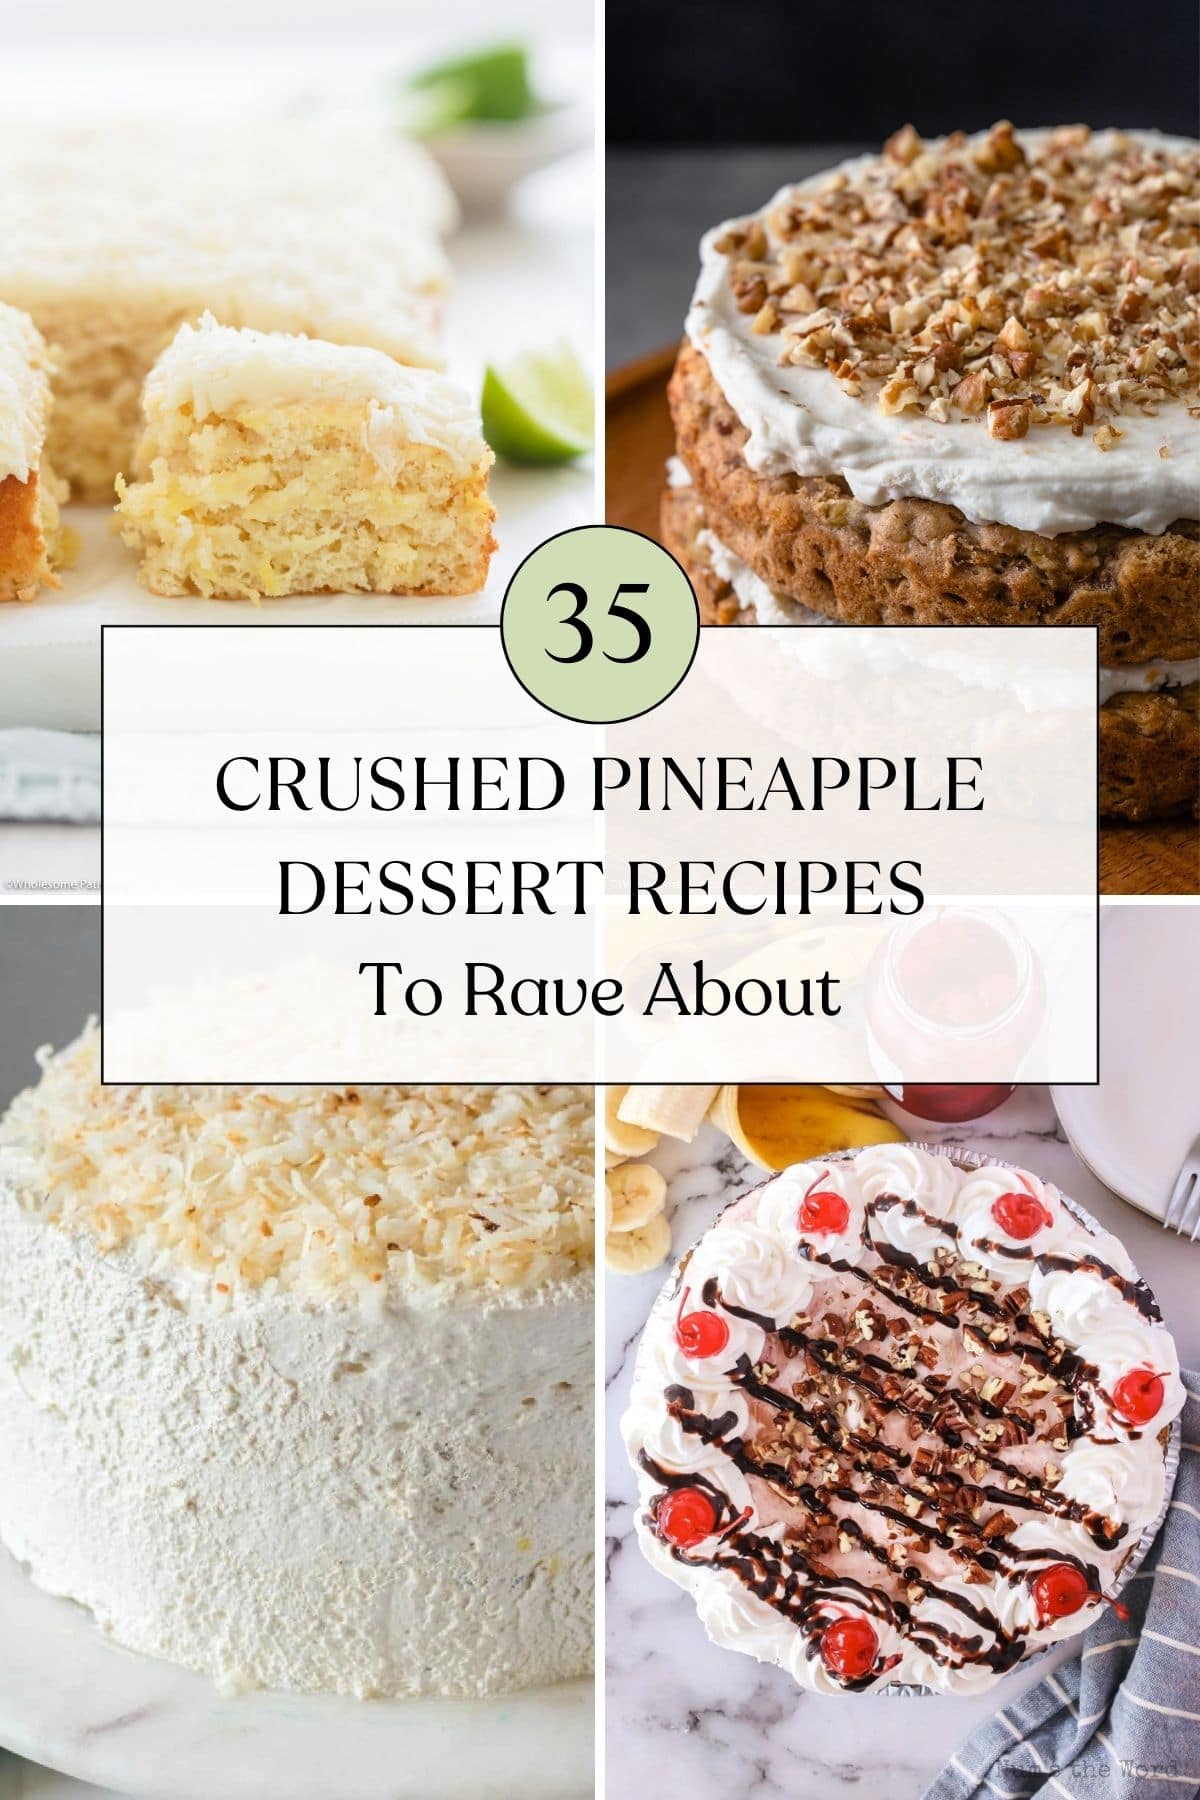 35 crushed pineapple dessert recipes.